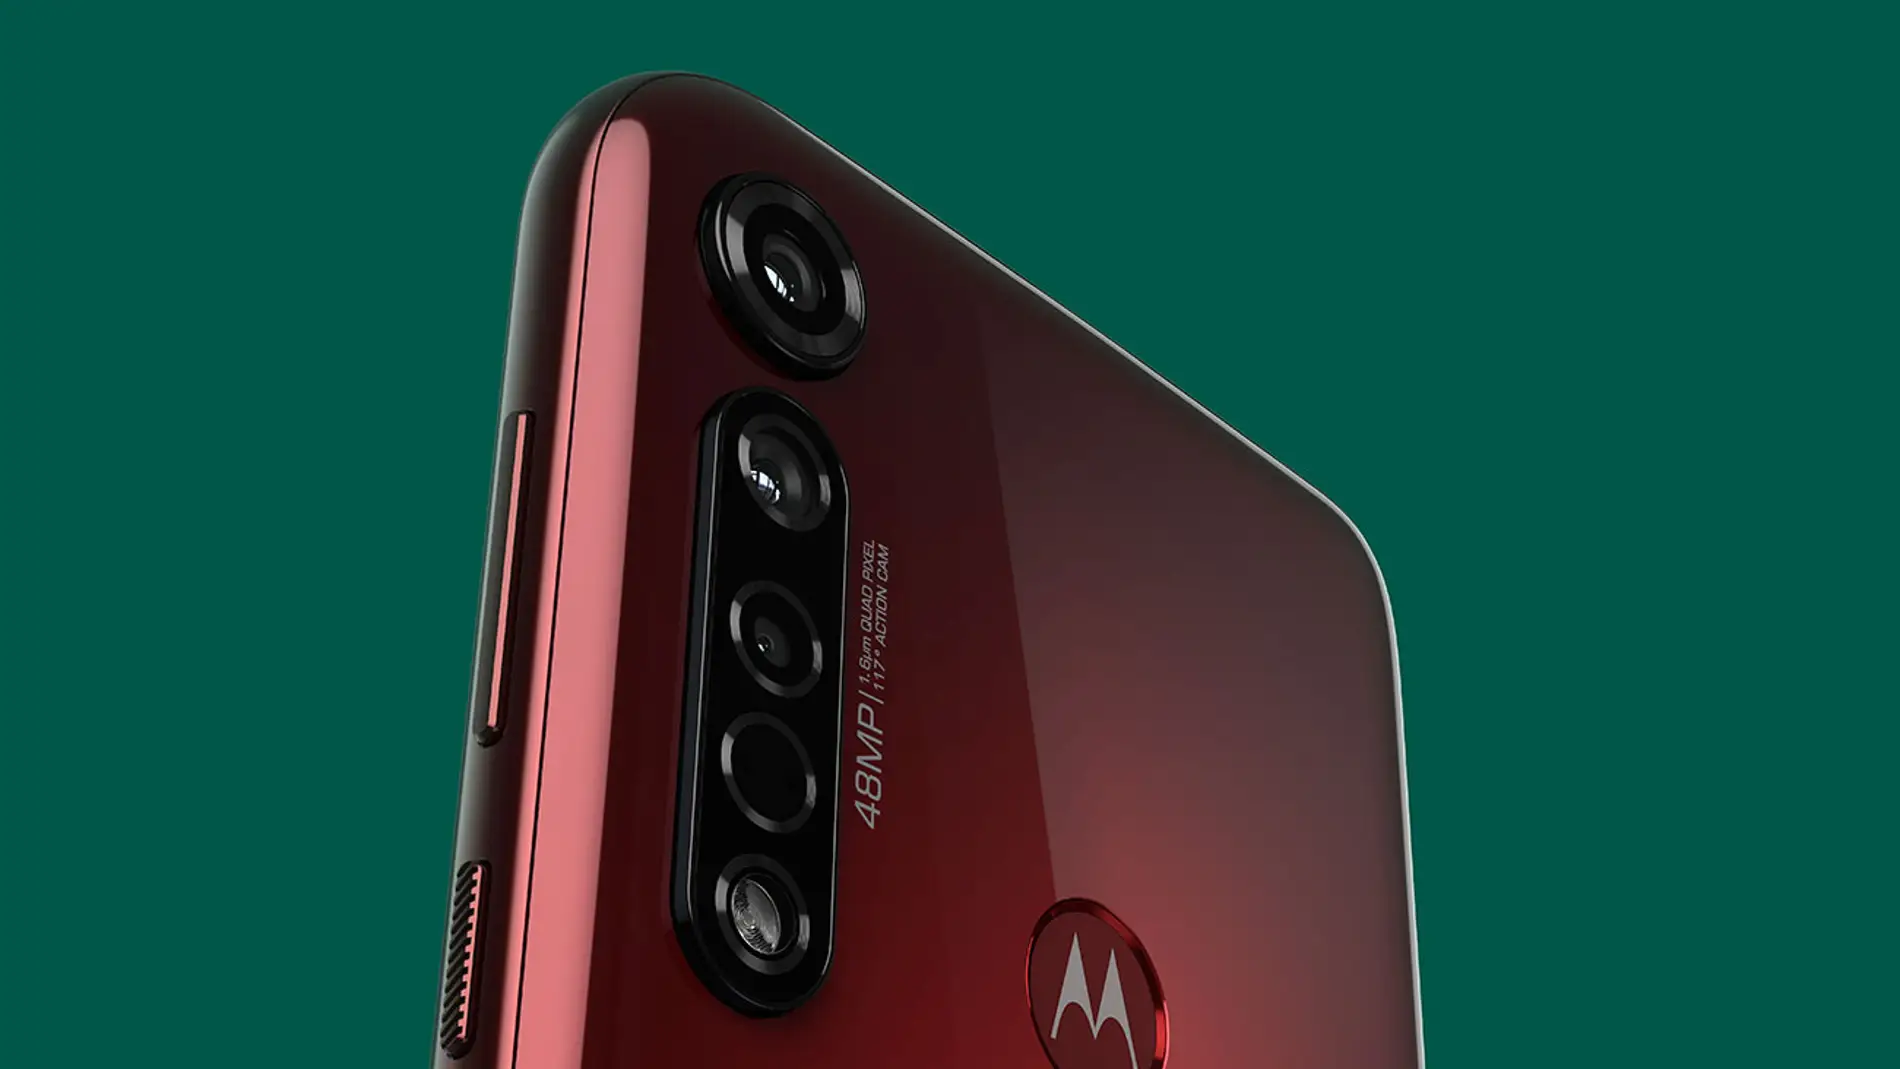 Motorola Moto G8